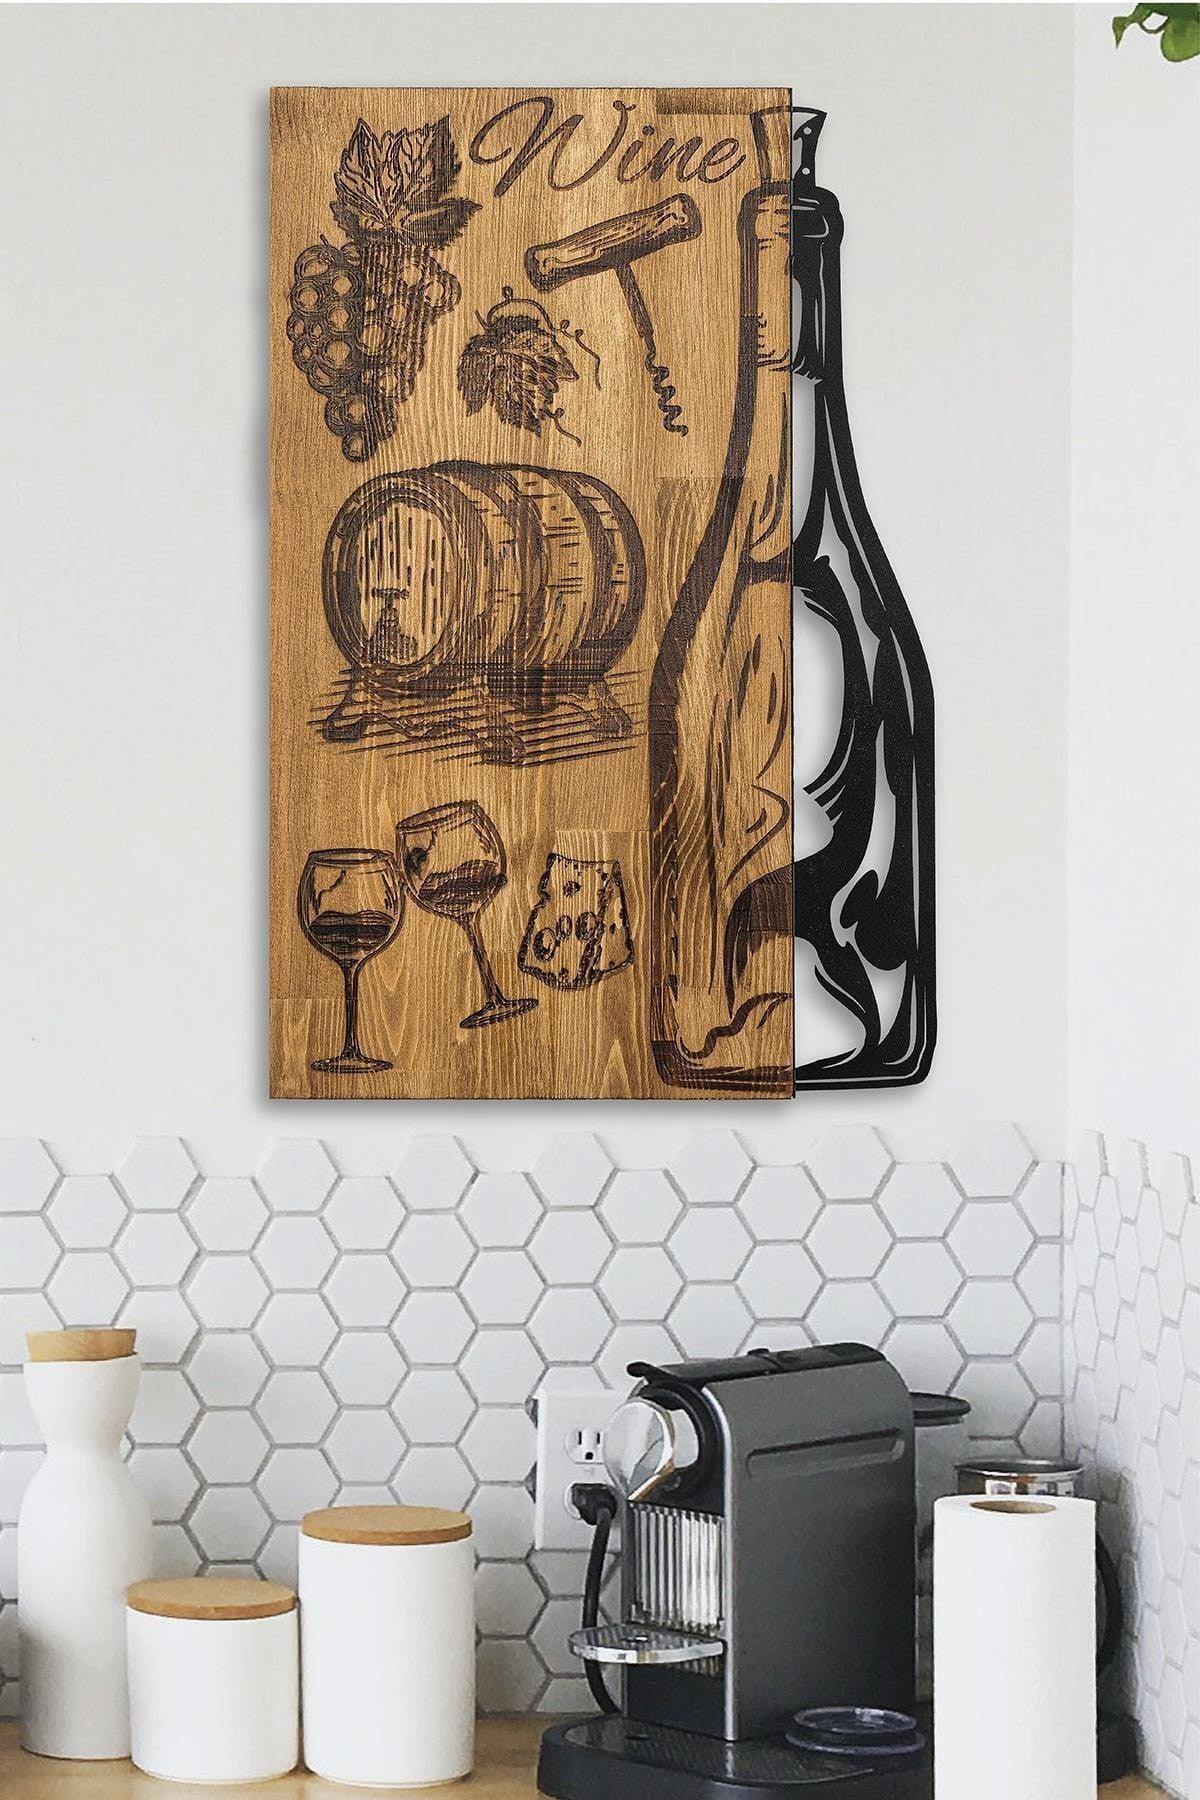 Doreart Wine Wood & Metal Wall Painting, Home Office Wall Board - Swordslife